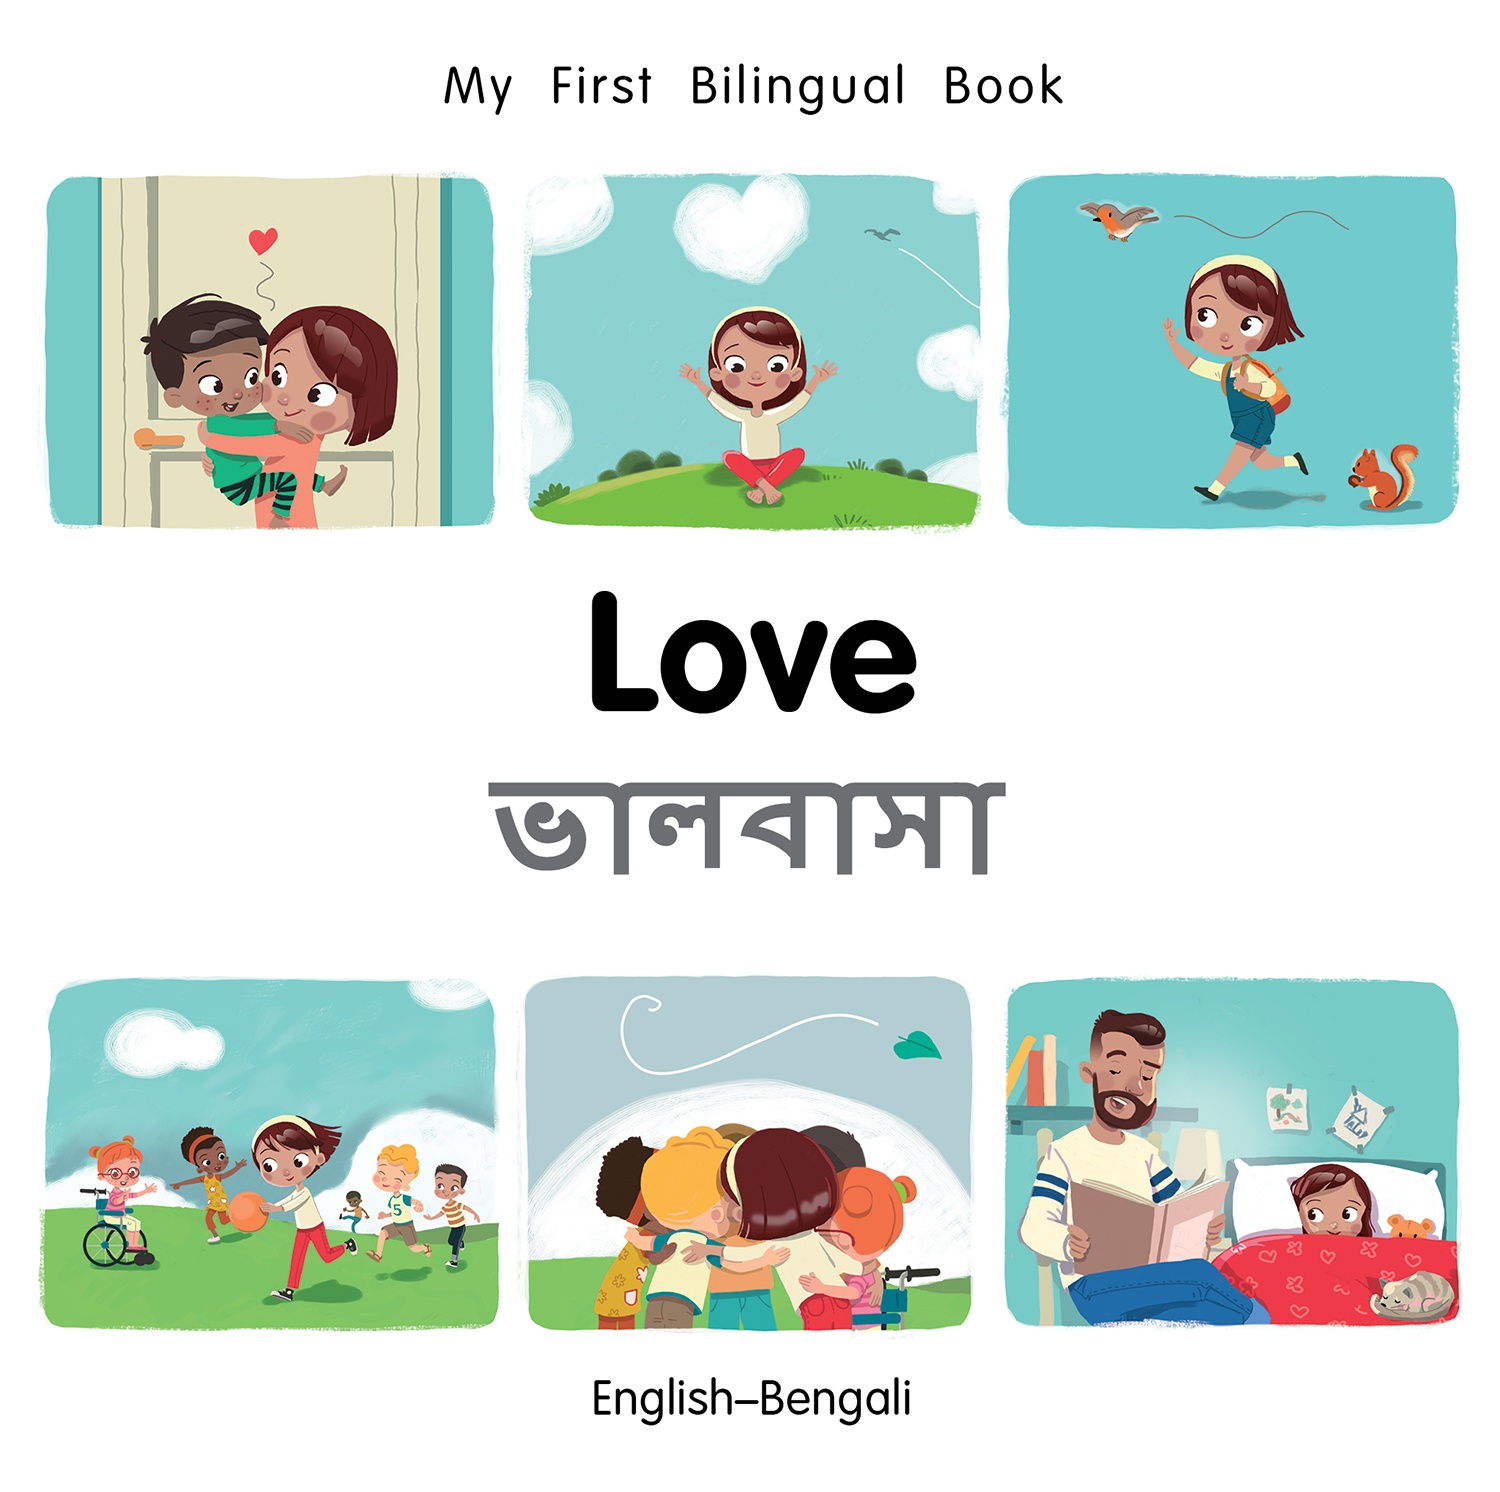 My First Bilingual Book – Love (English-Bengali)